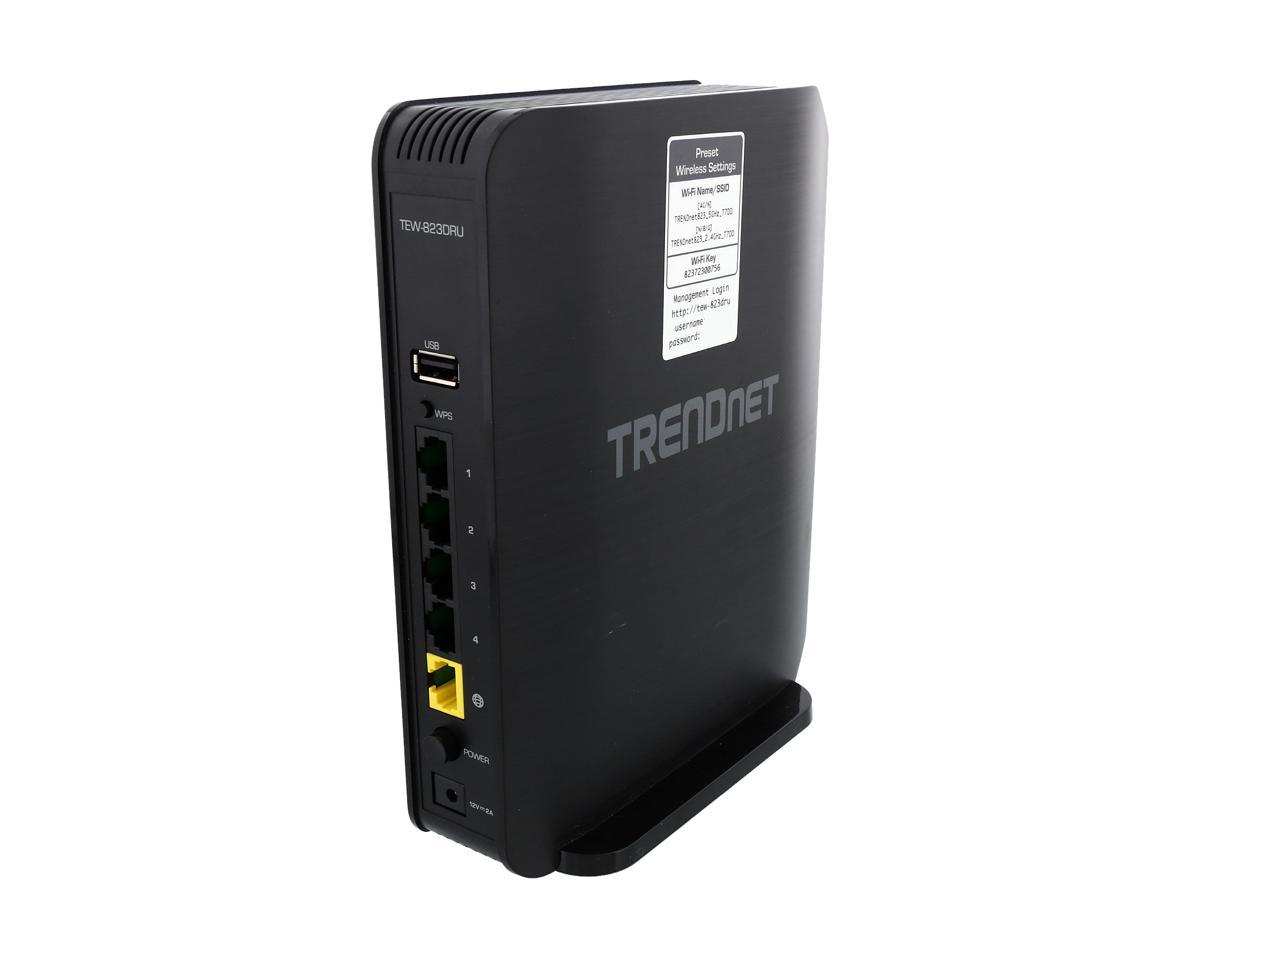 TRENDnet TEW-823DRU AC1750 Dual Band Wireless AC Gigabit Router,2.4GHz